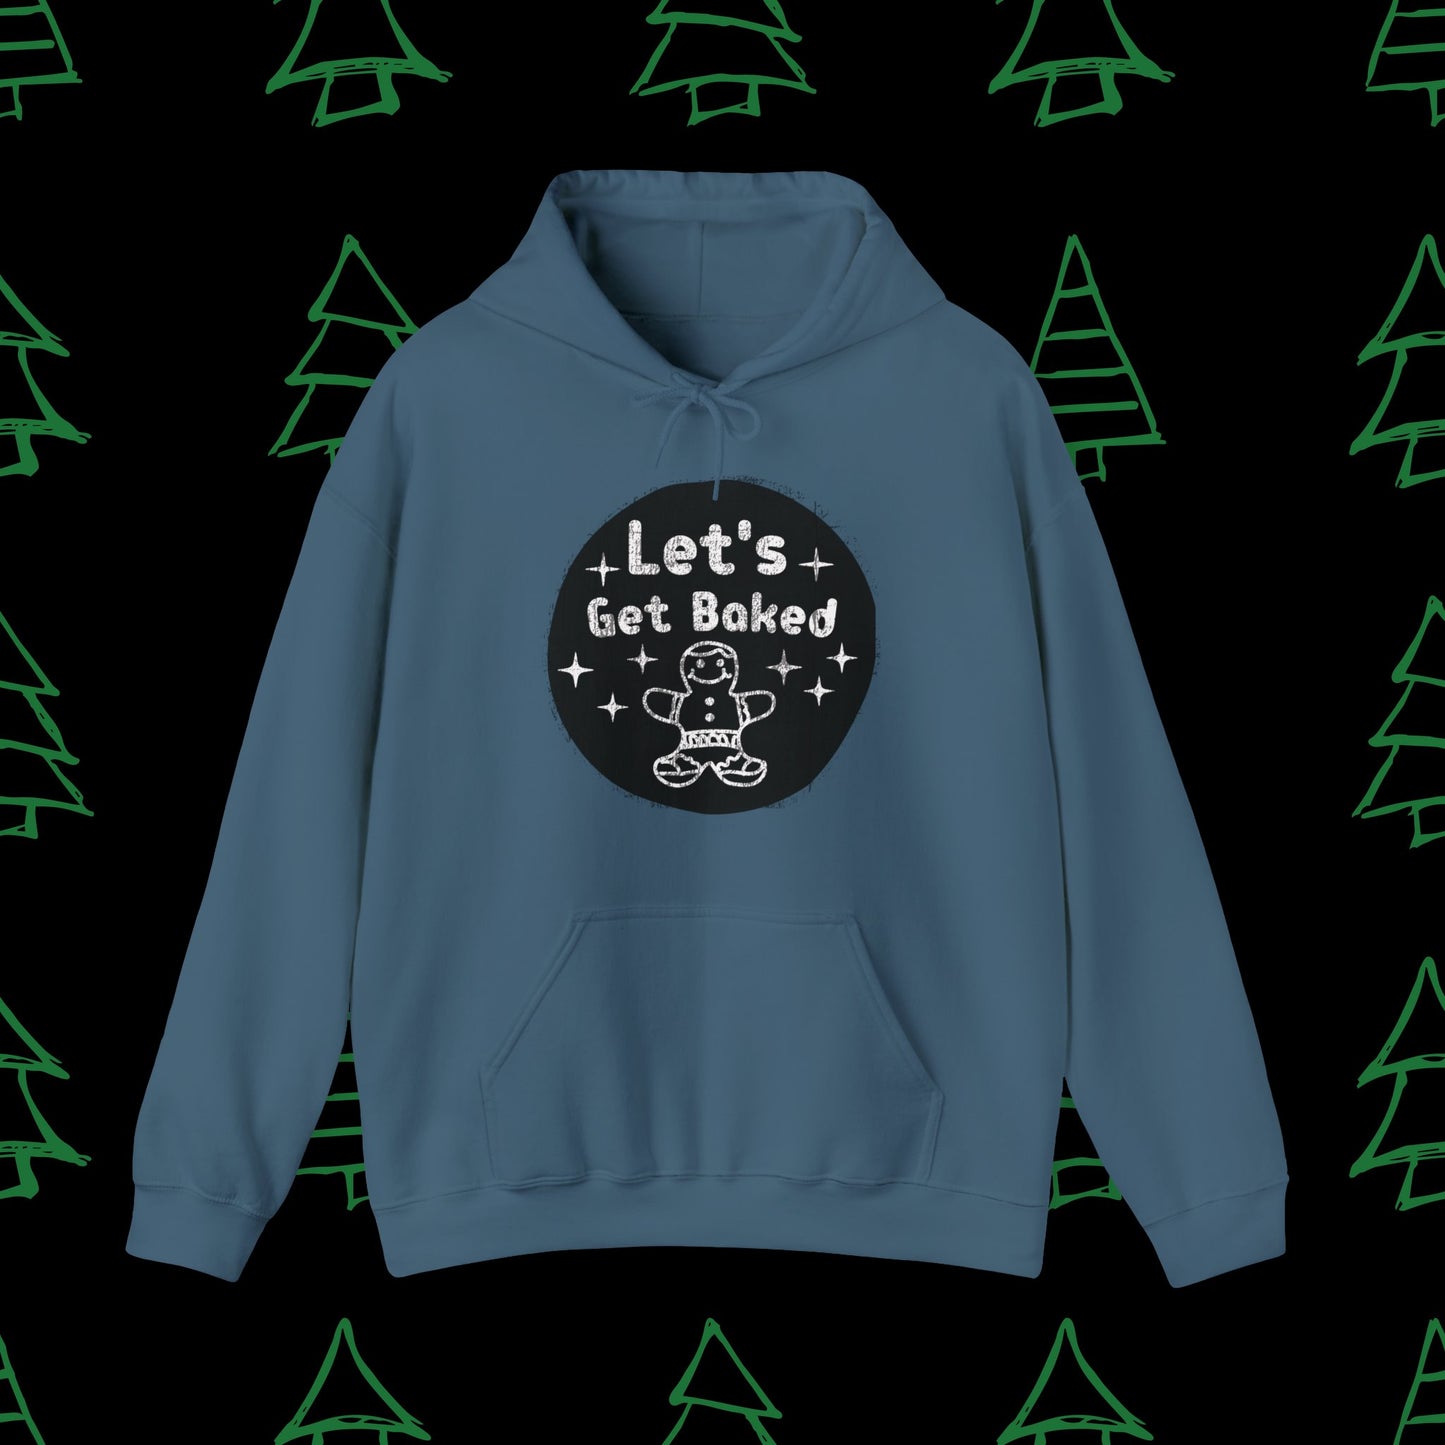 Christmas Hoodie - Let's Get Baked - Mens Christmas Shirts - Adult Christmas Hooded Sweatshirt Hooded Sweatshirt Graphic Avenue Indigo Blue Adult Small 